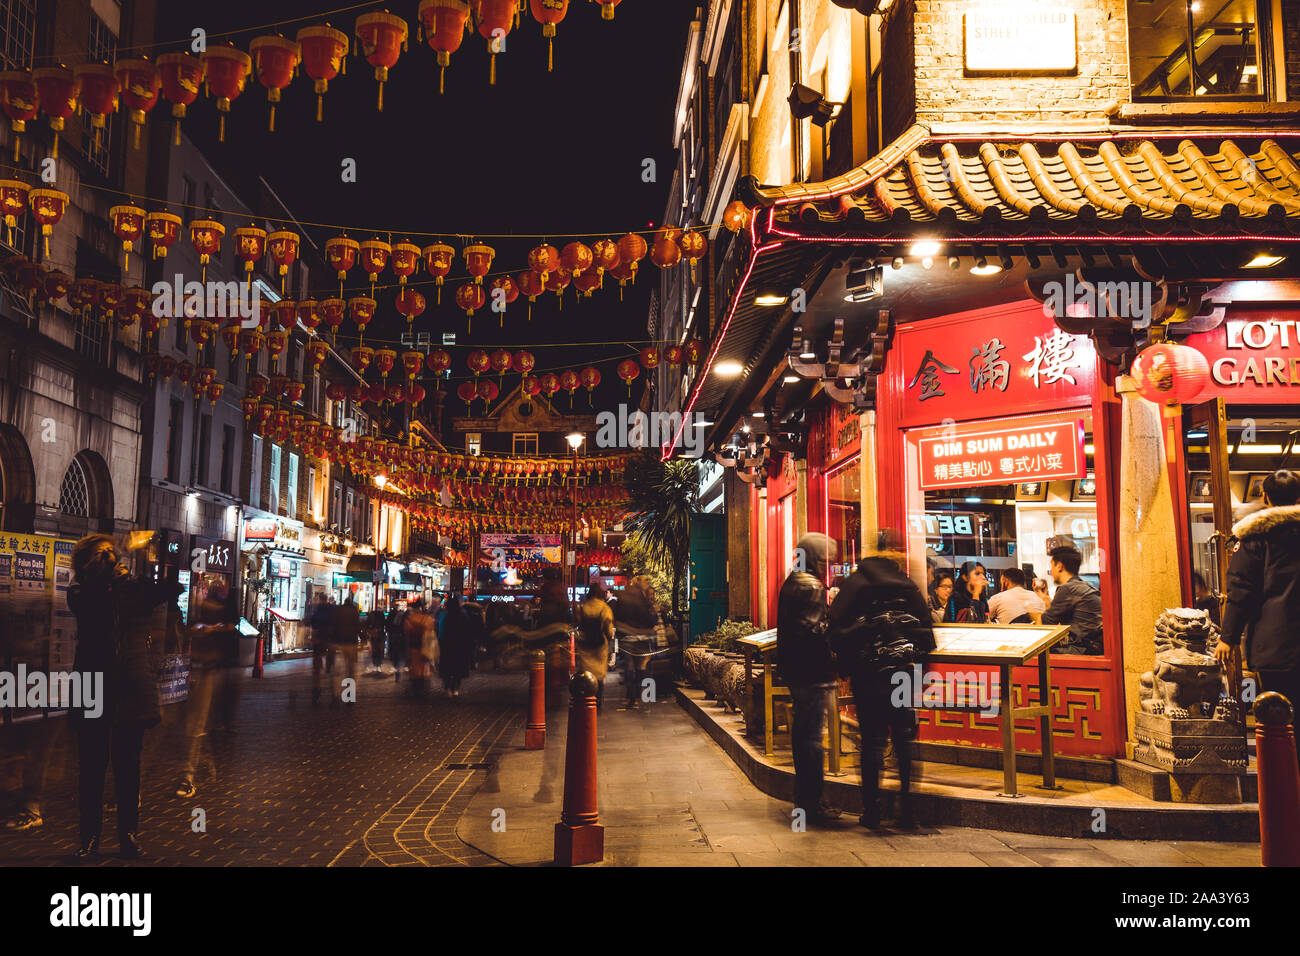 LONDON - NOVEMBER 13, 2019: Chinatown in London at night Stock Photo